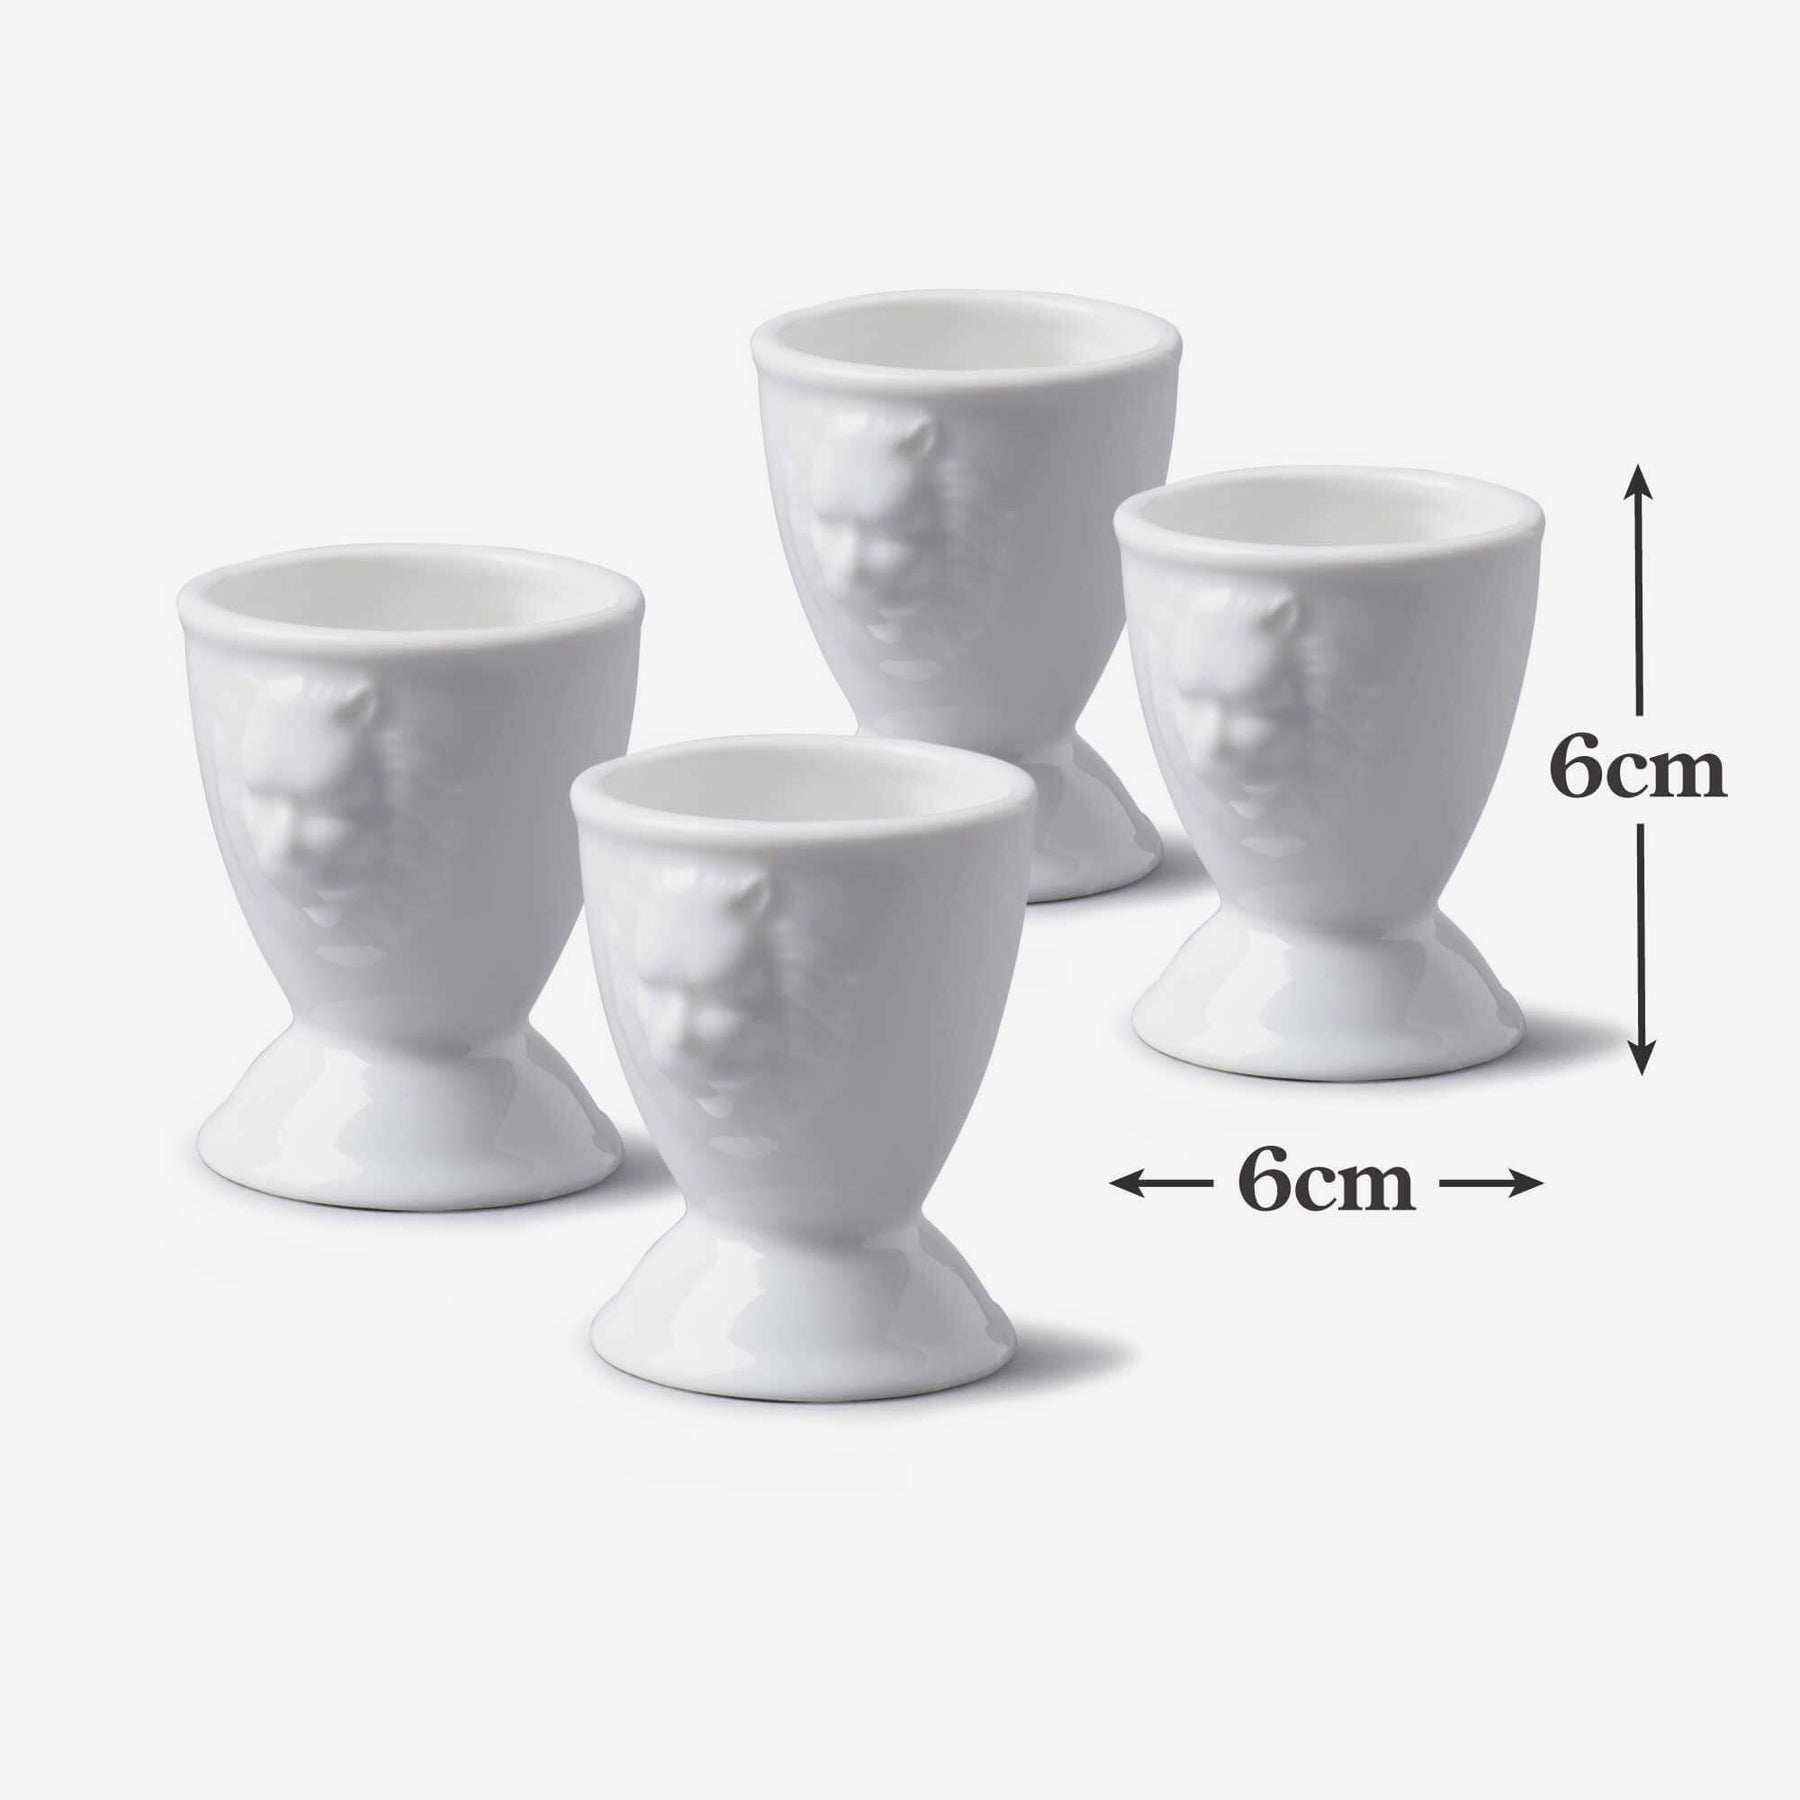 Porcelain Lion Head Single Egg Cup, Set of 4